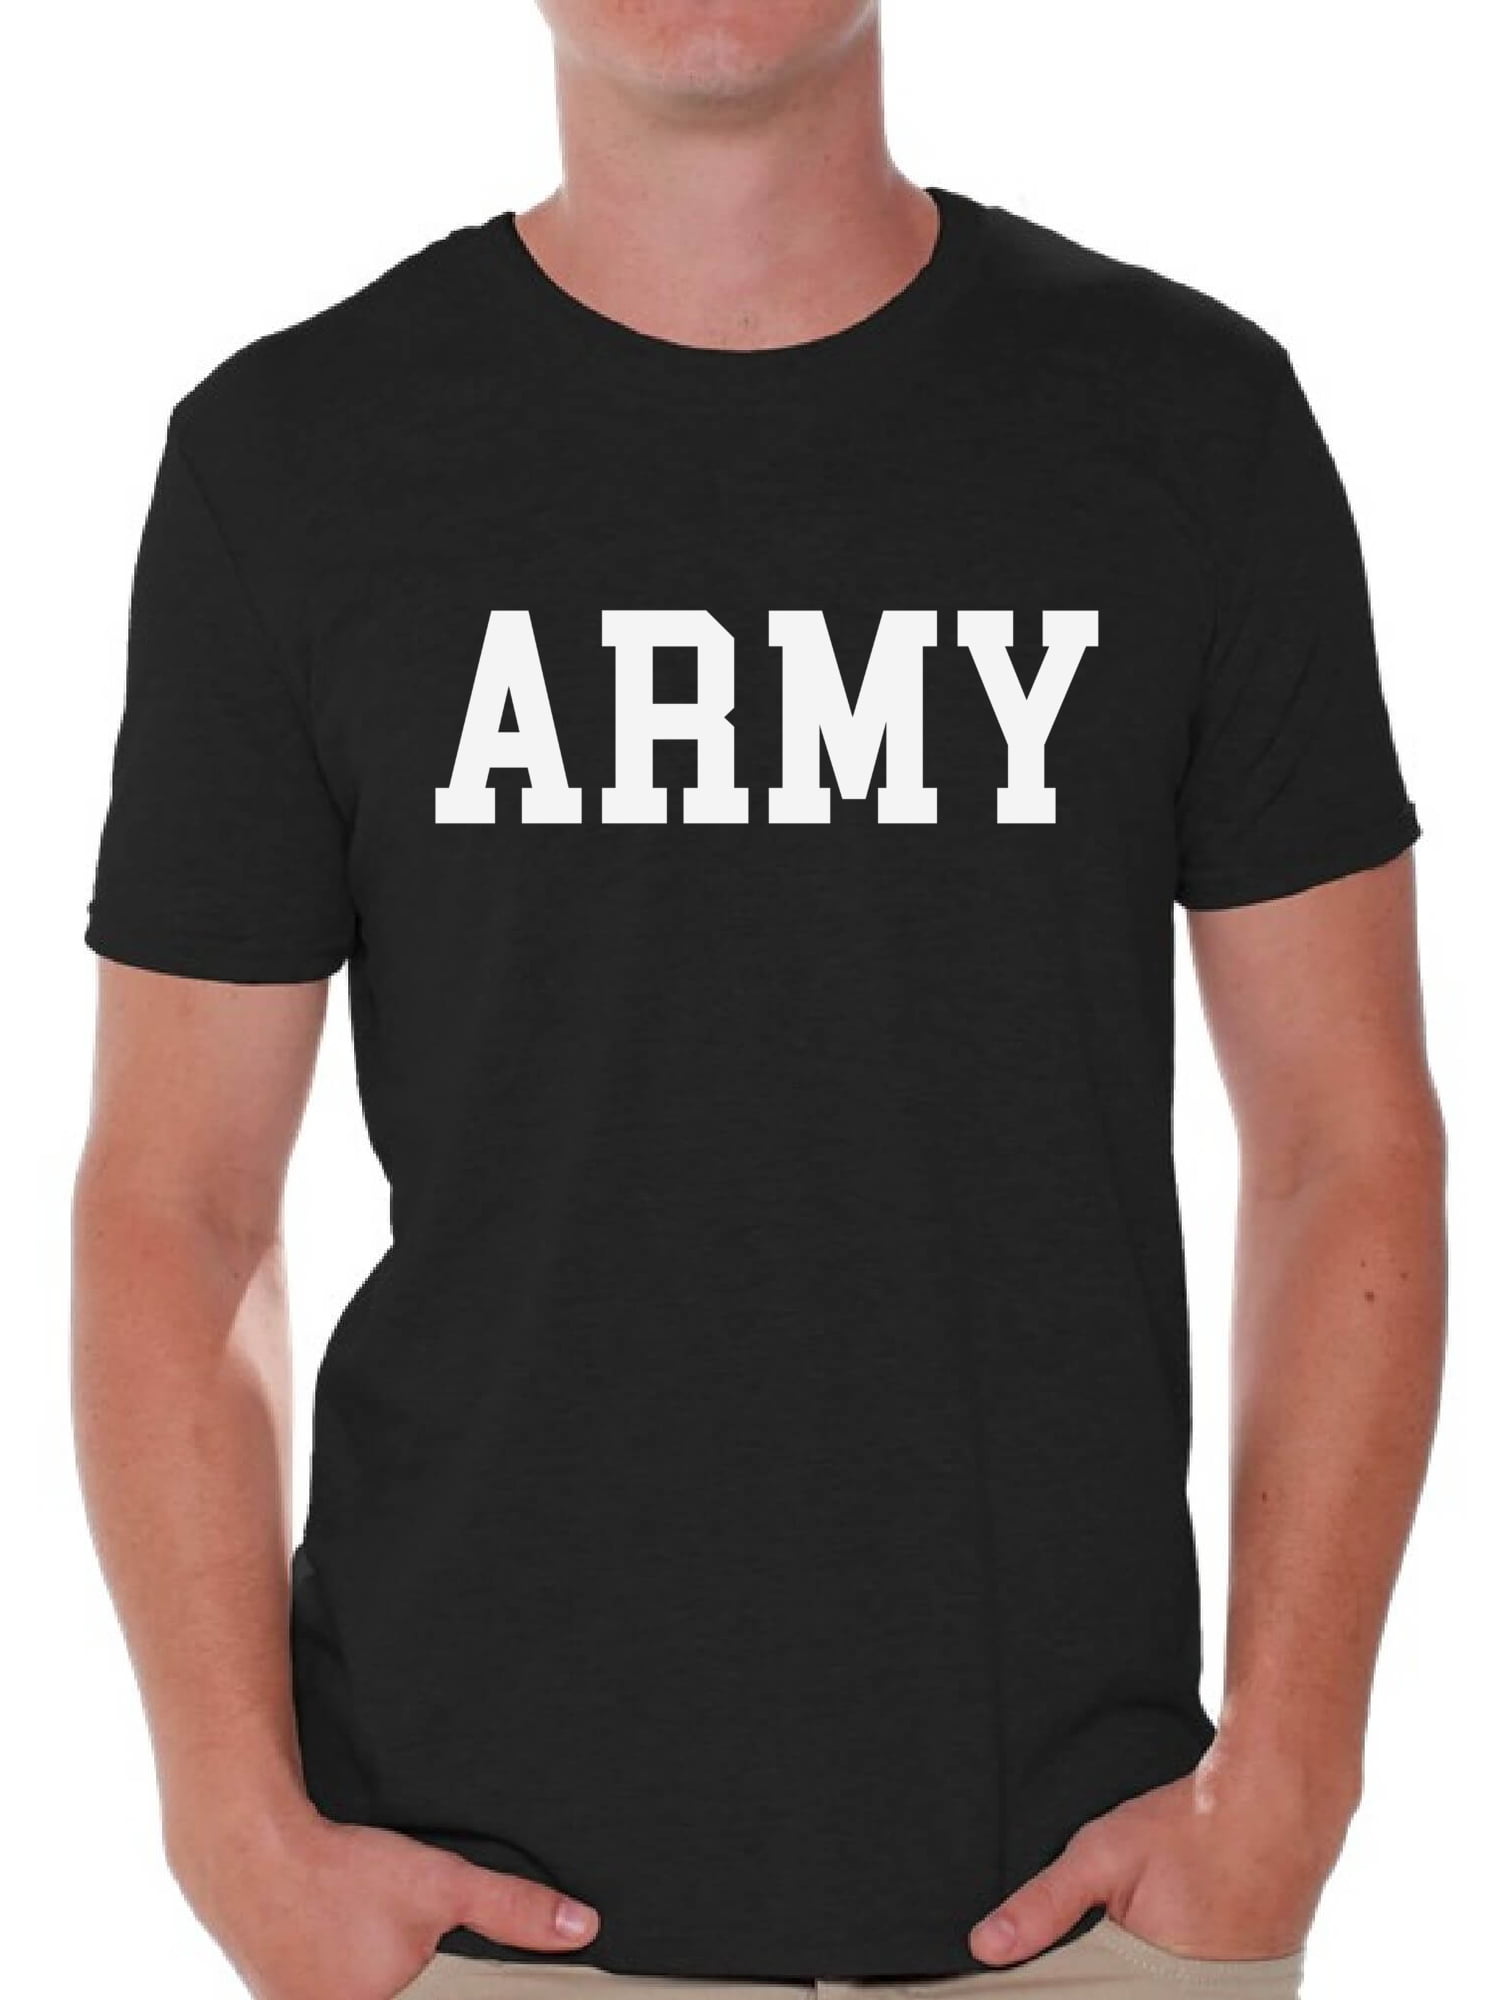 Awkward Styles - Awkward Styles Men's Army Shirt Military Tshirt Army ...